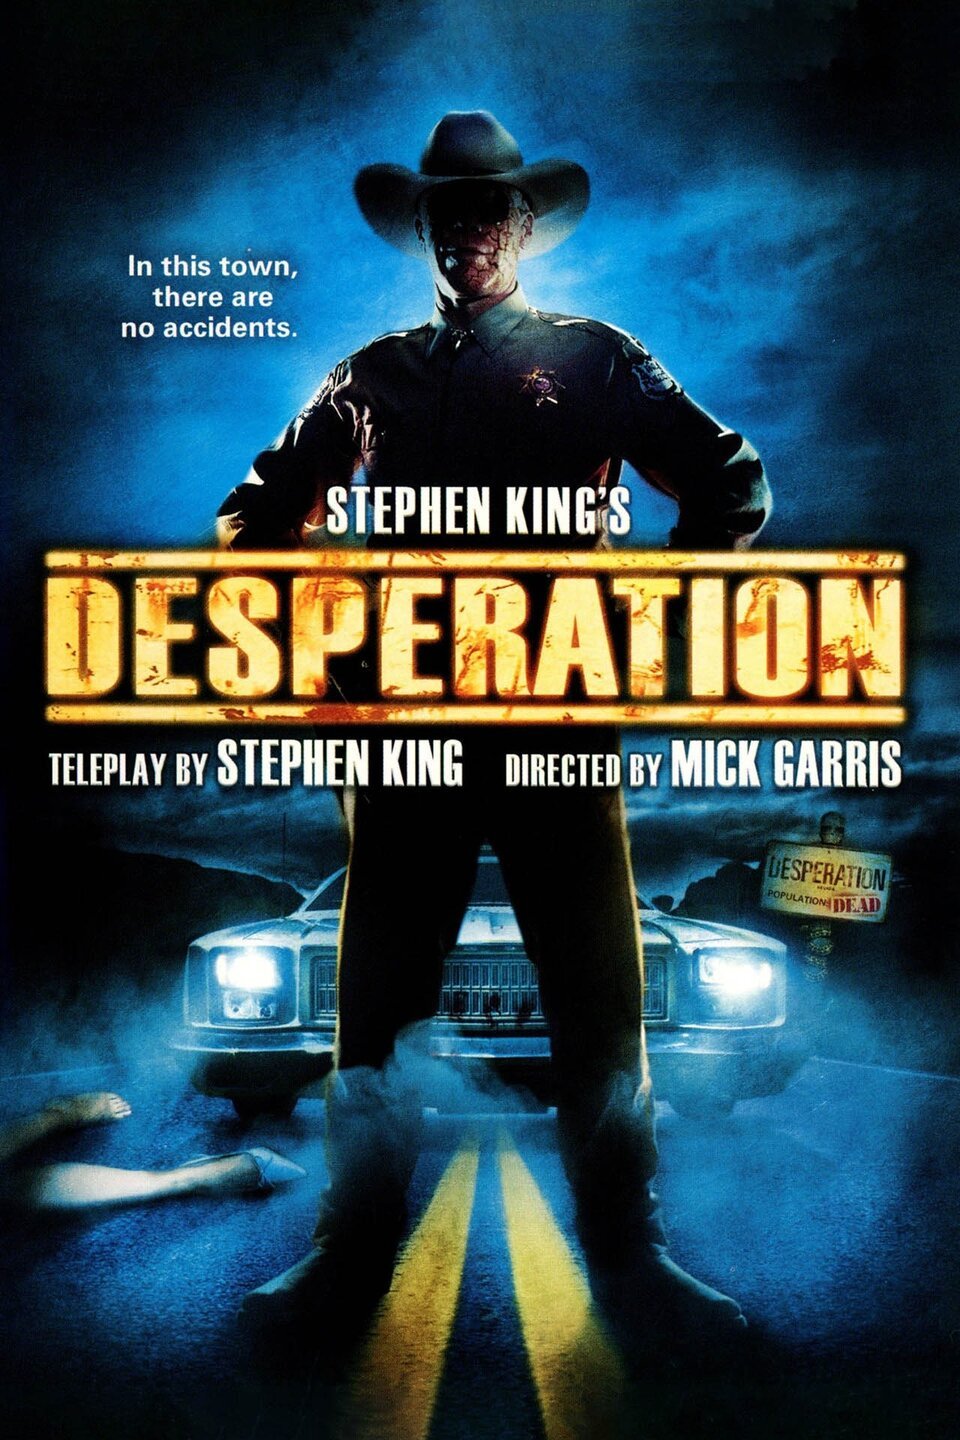 stephen king desperation movie review